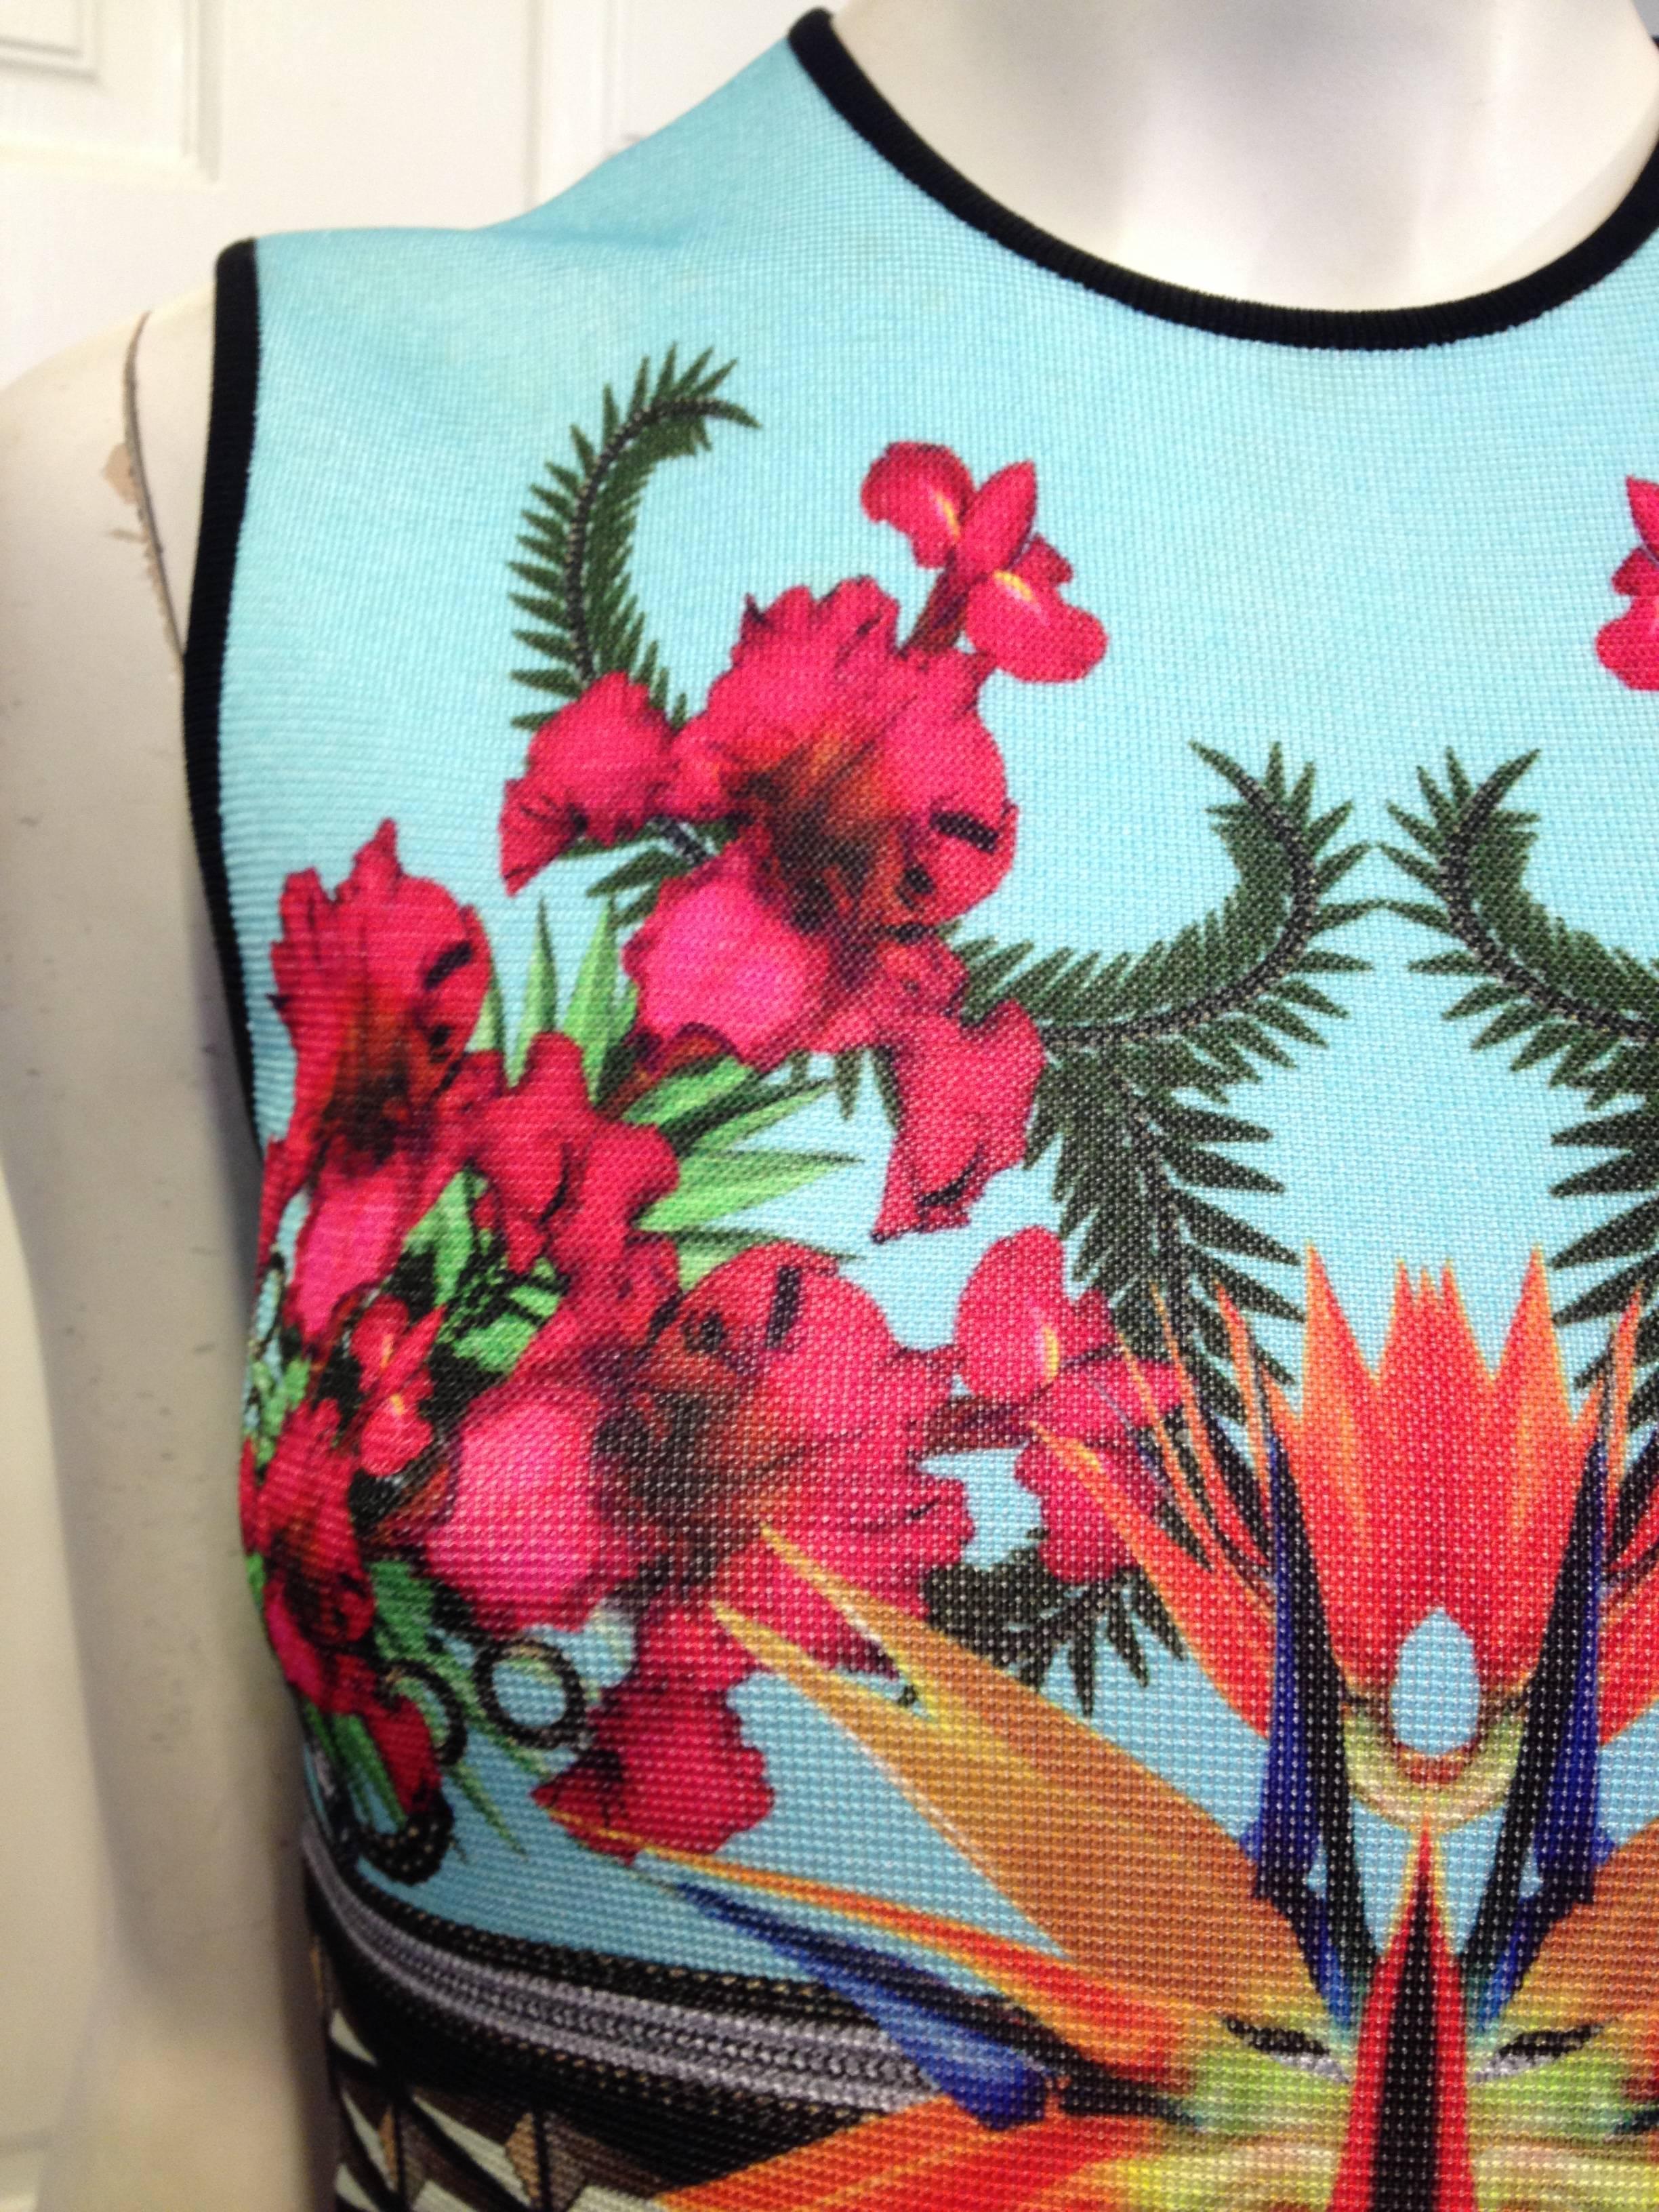 Givenchy Aqua Floral Knit Dress 2